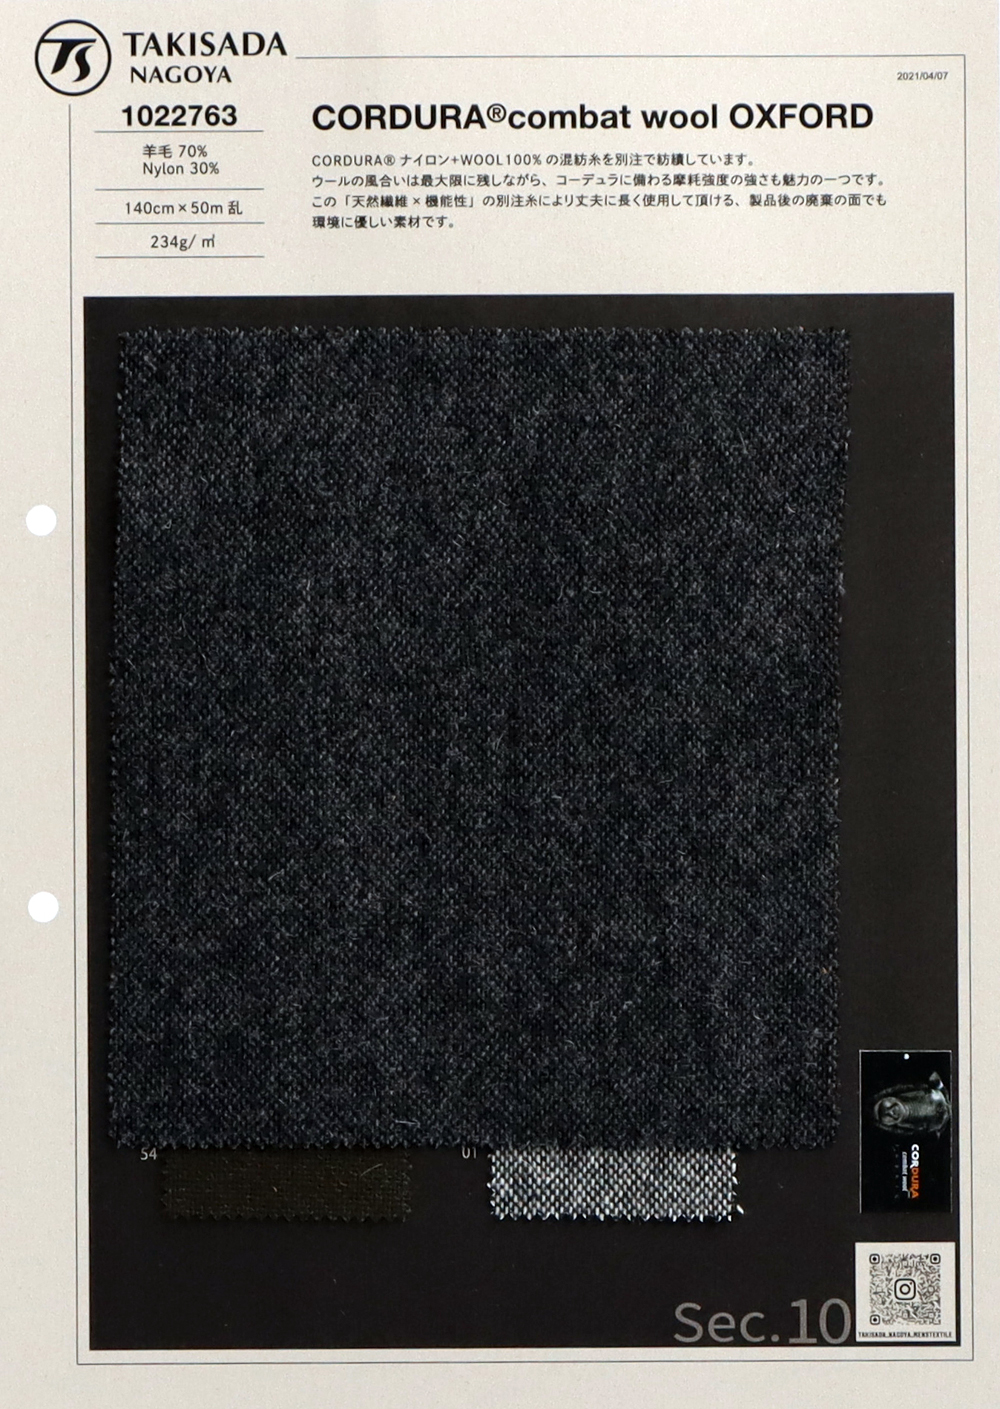 1022763 CORDURA Combat Wool Oxford[Textile / Fabric] Takisada Nagoya